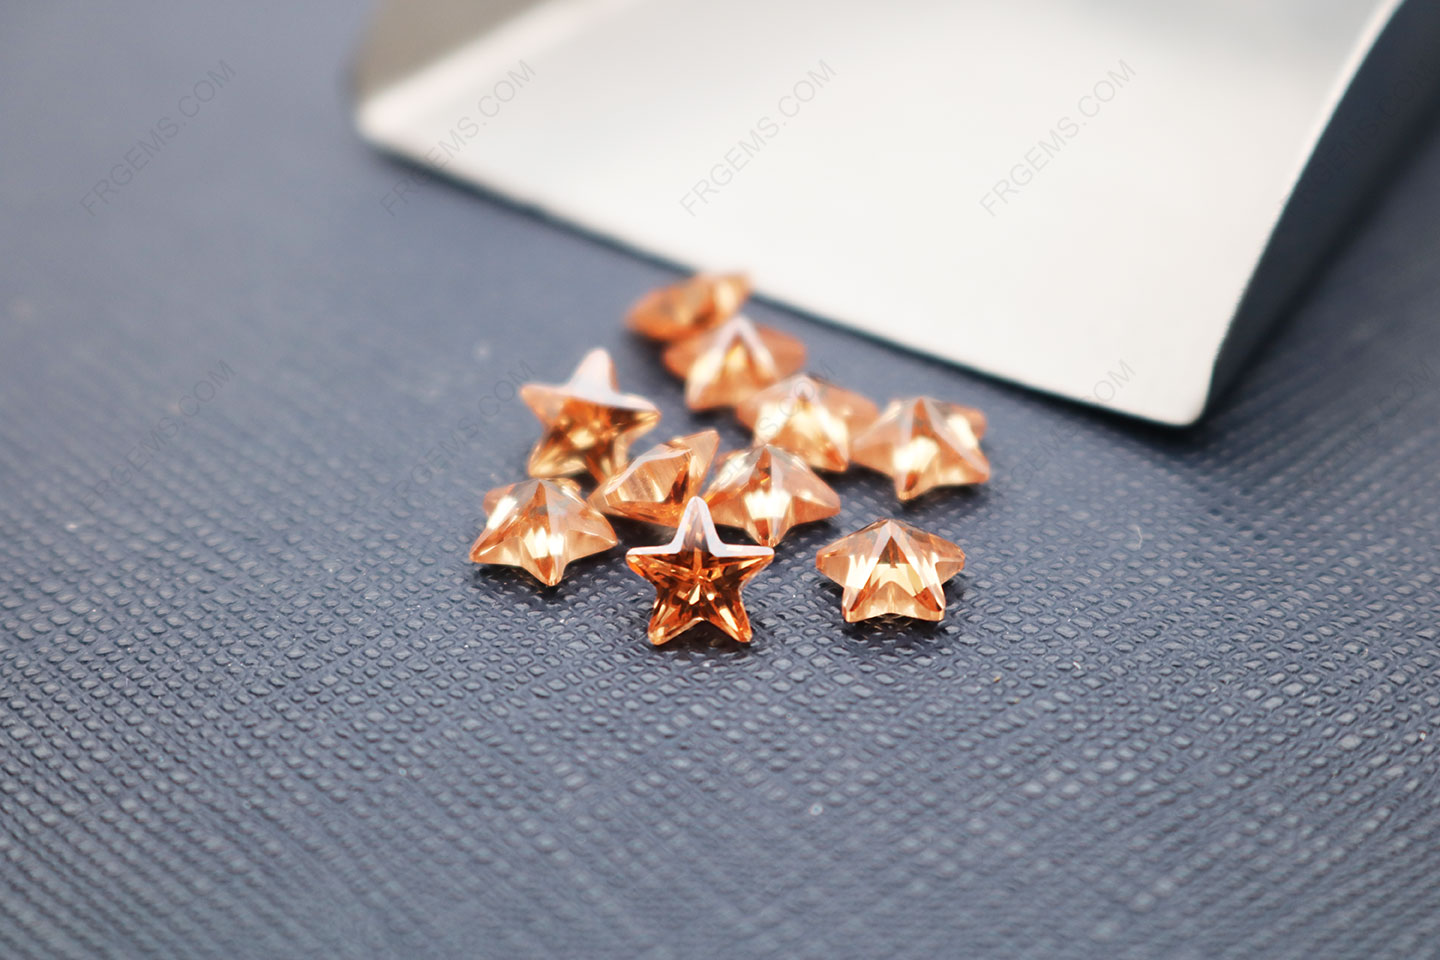 Cubic Zirconia Champagne Color Dark shade Five point Star Cut Star Cut 6x6mm gemstones